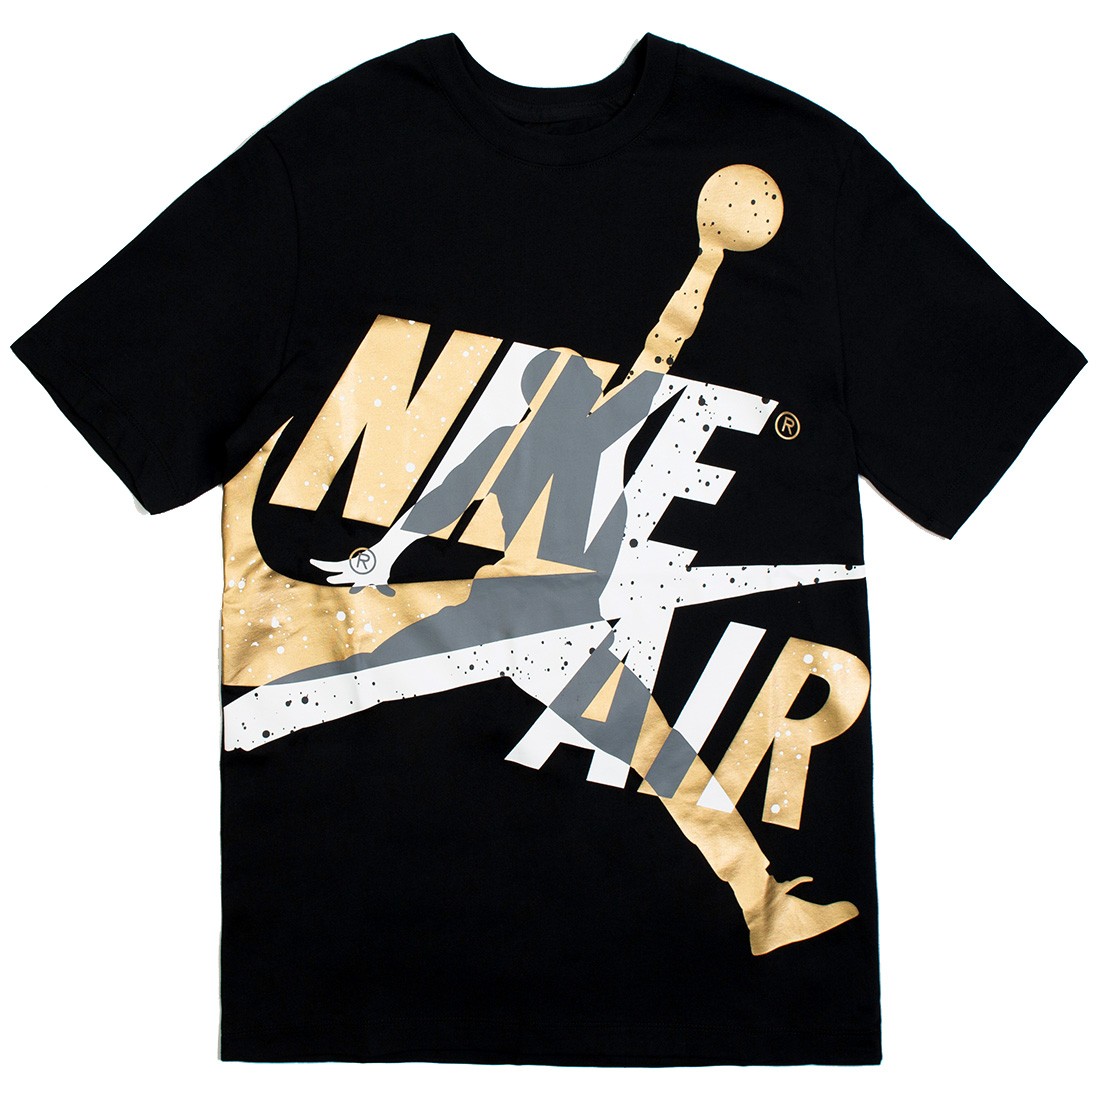 Jordan, Shirts, Jordan Short Sleeve White Tshirt With Air Jordan Gold And  Black Graphic